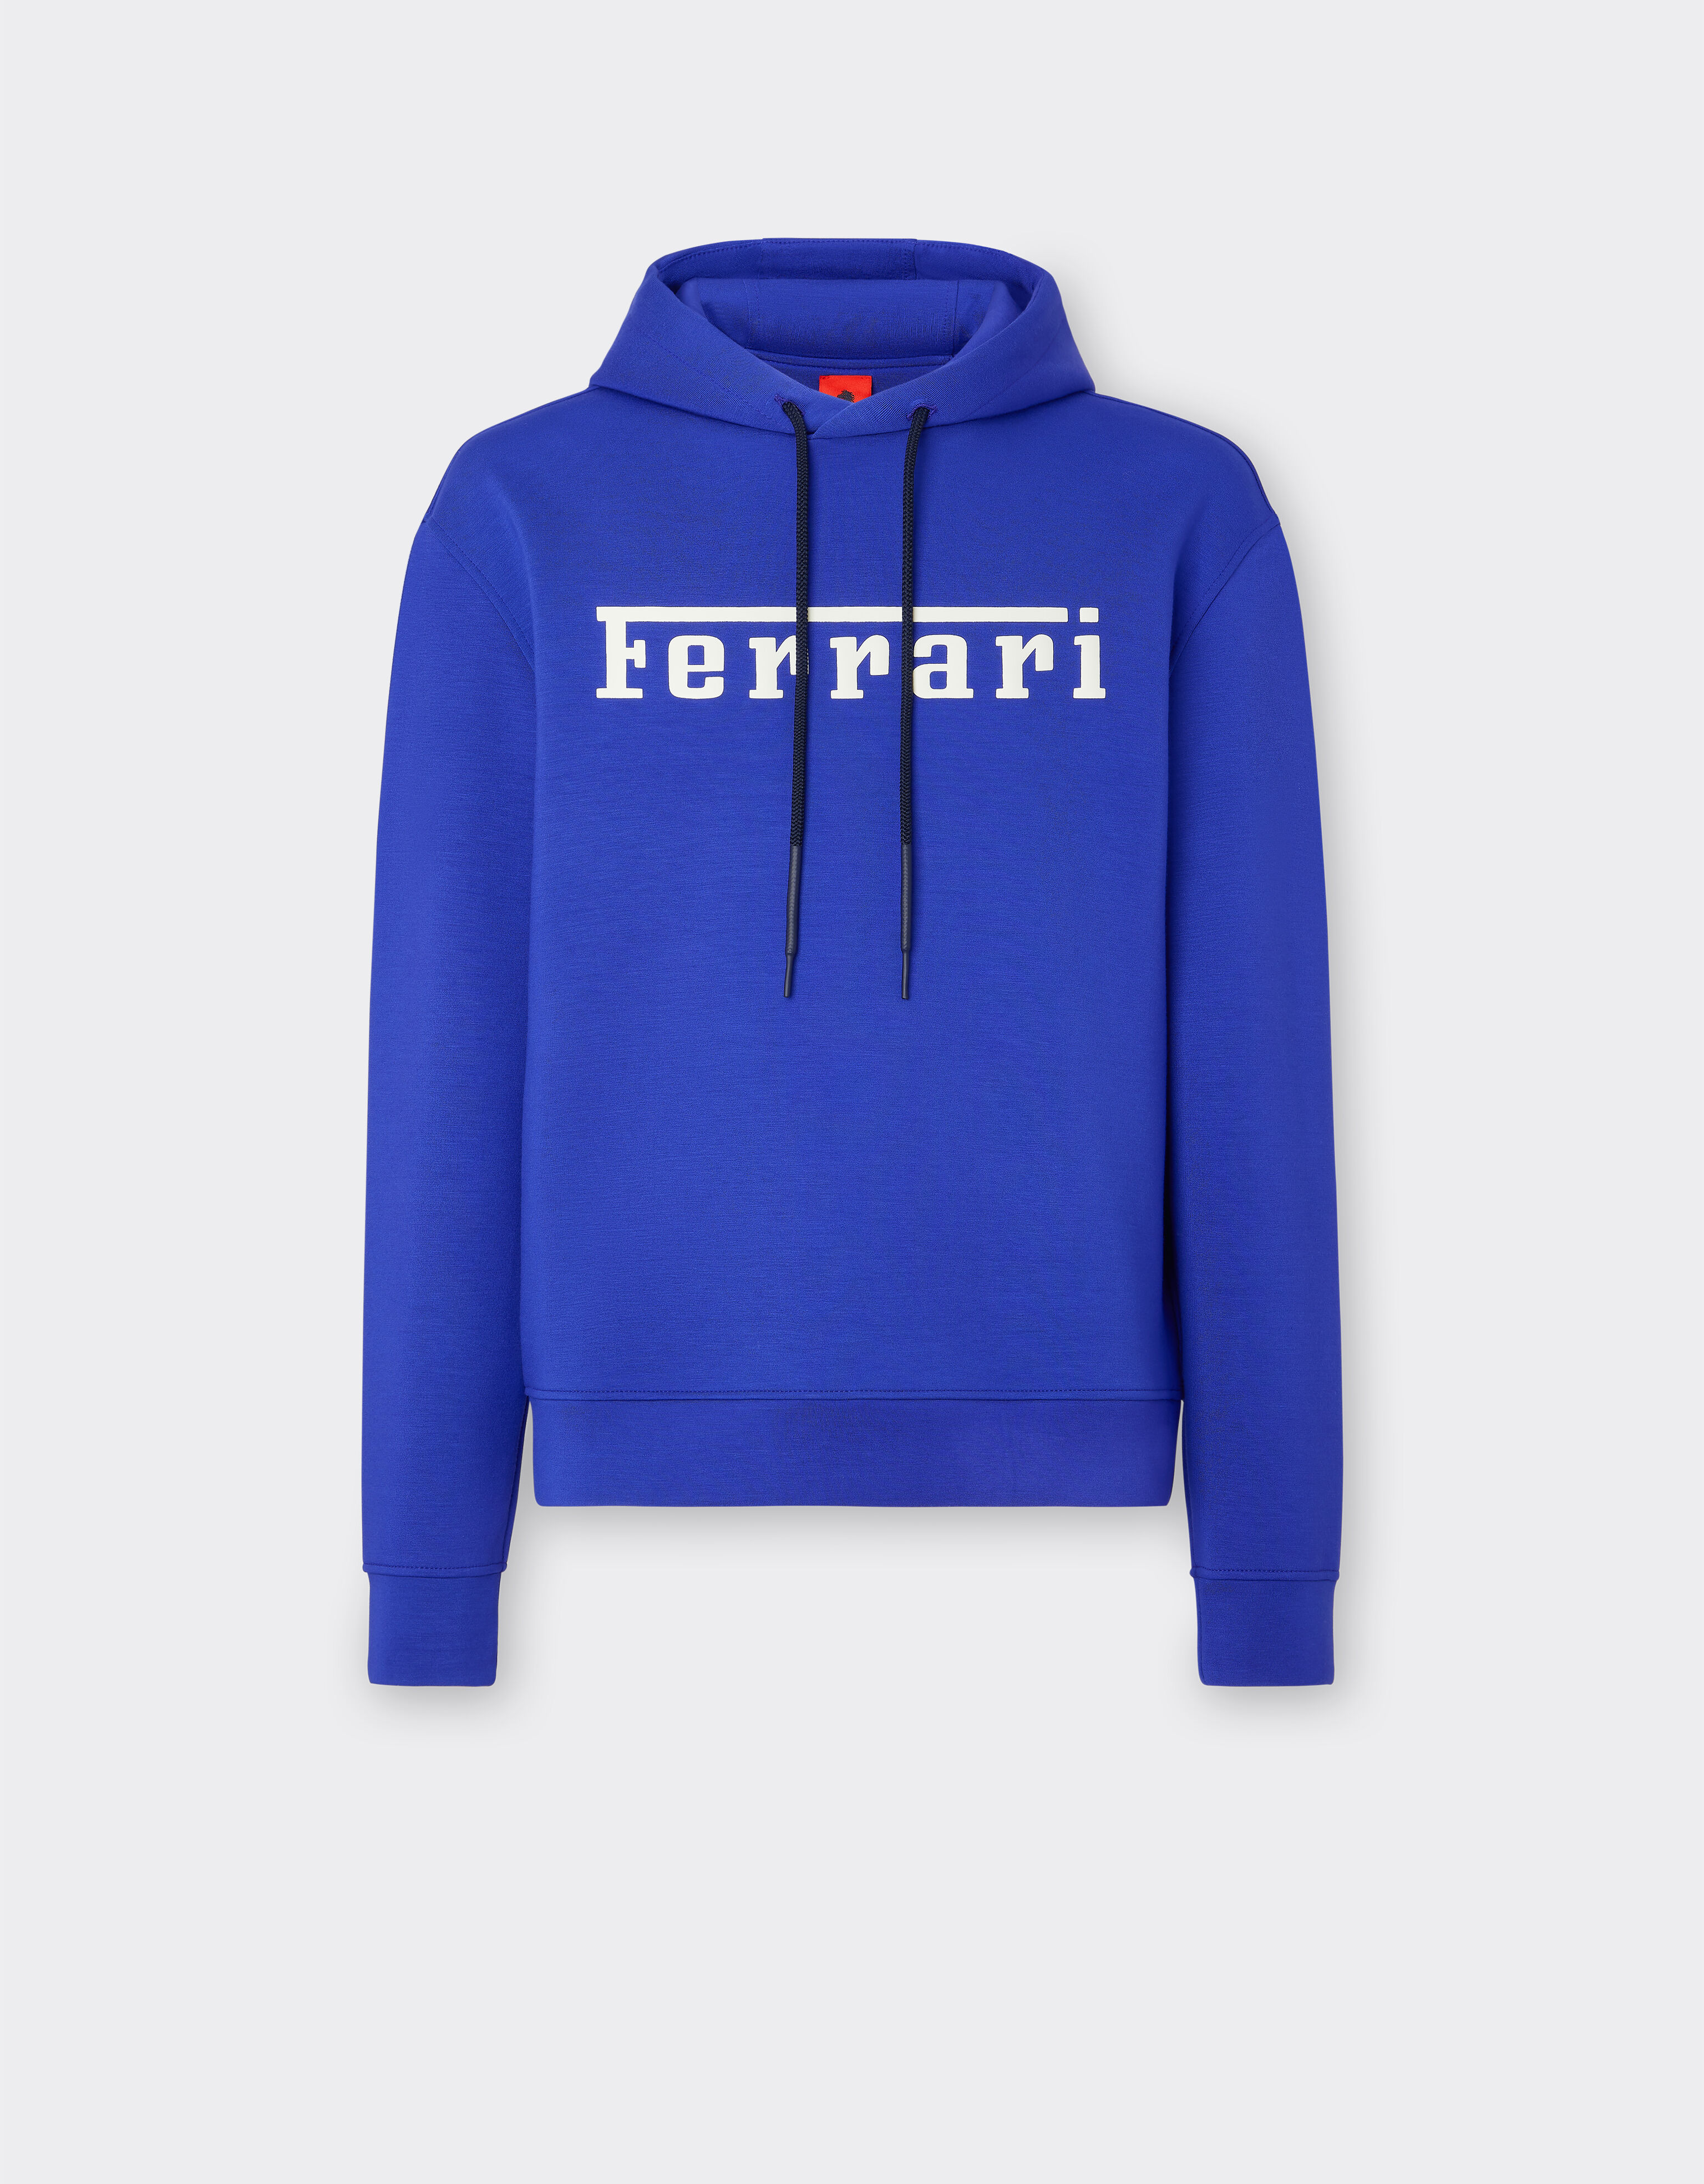 Ferrari Scuba knit sweatshirt with contrast Ferrari logo Antique Blue 47819f